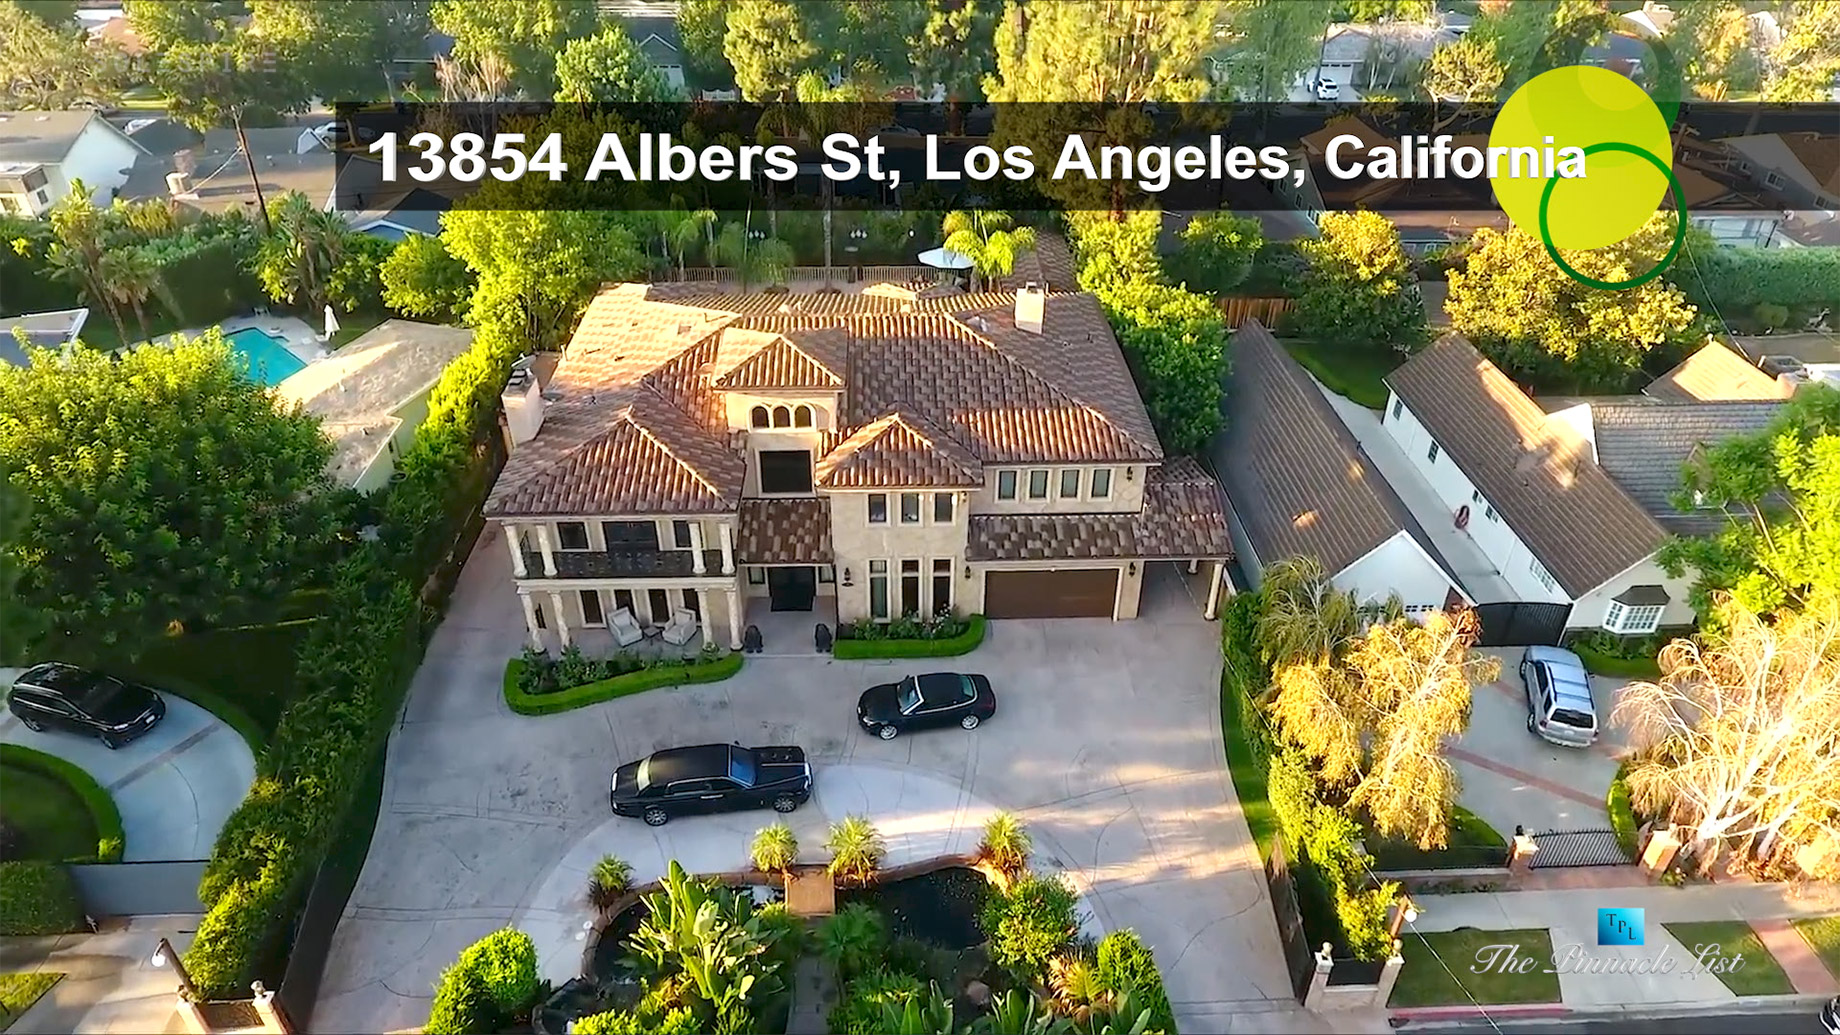 Palatial Mediterranean Home - 13854 Albers St, Los Angeles, California, USA - Luxury Real Estate